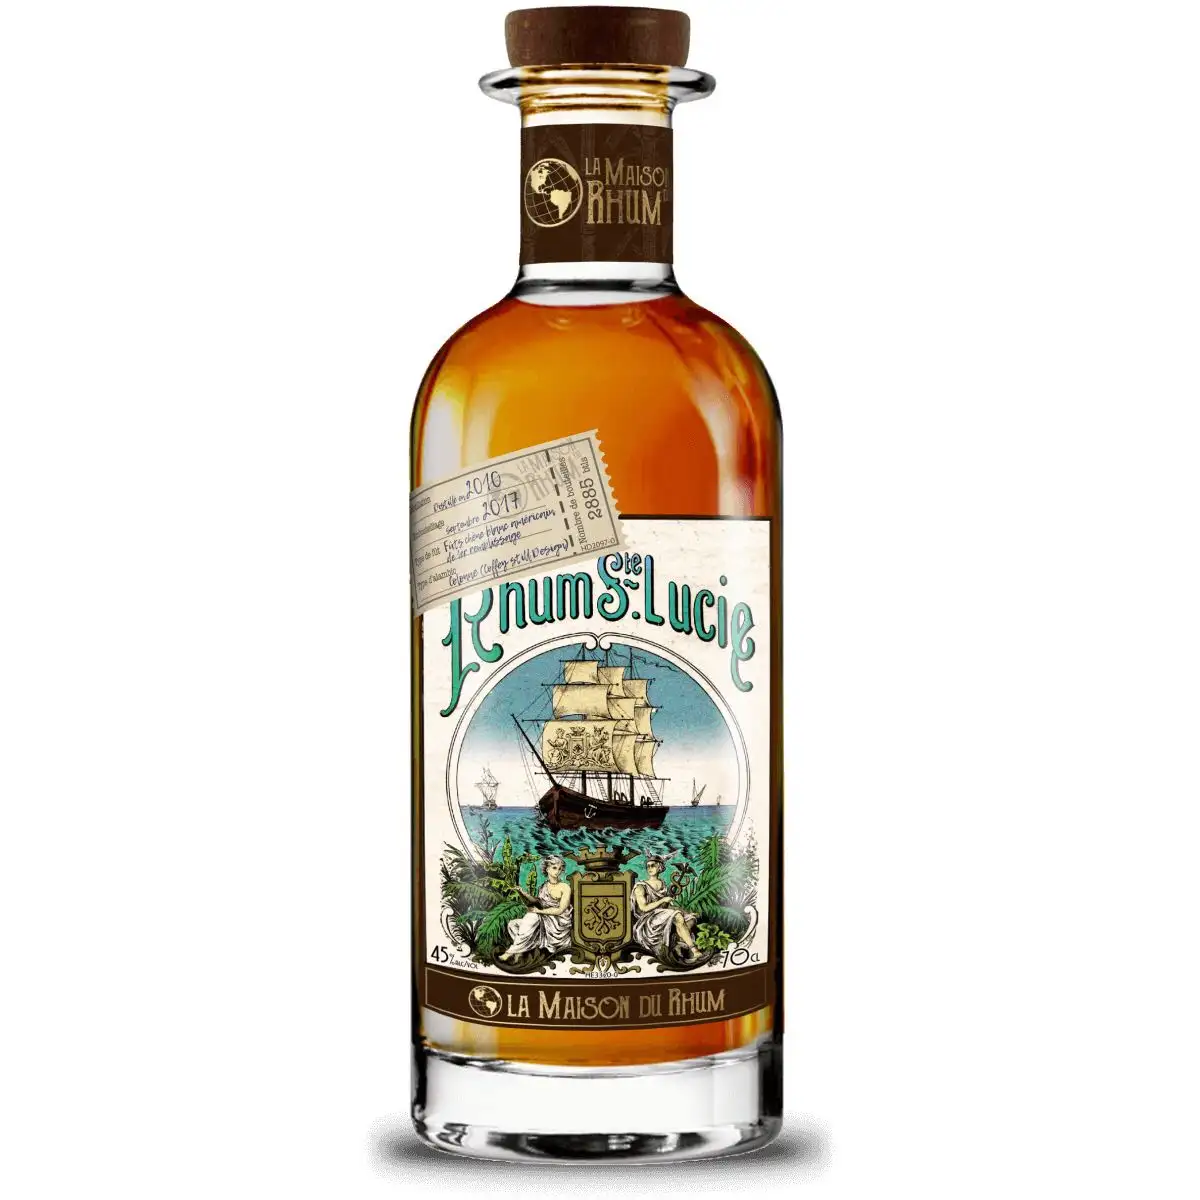 Image of the front of the bottle of the rum La Maison du Rhum